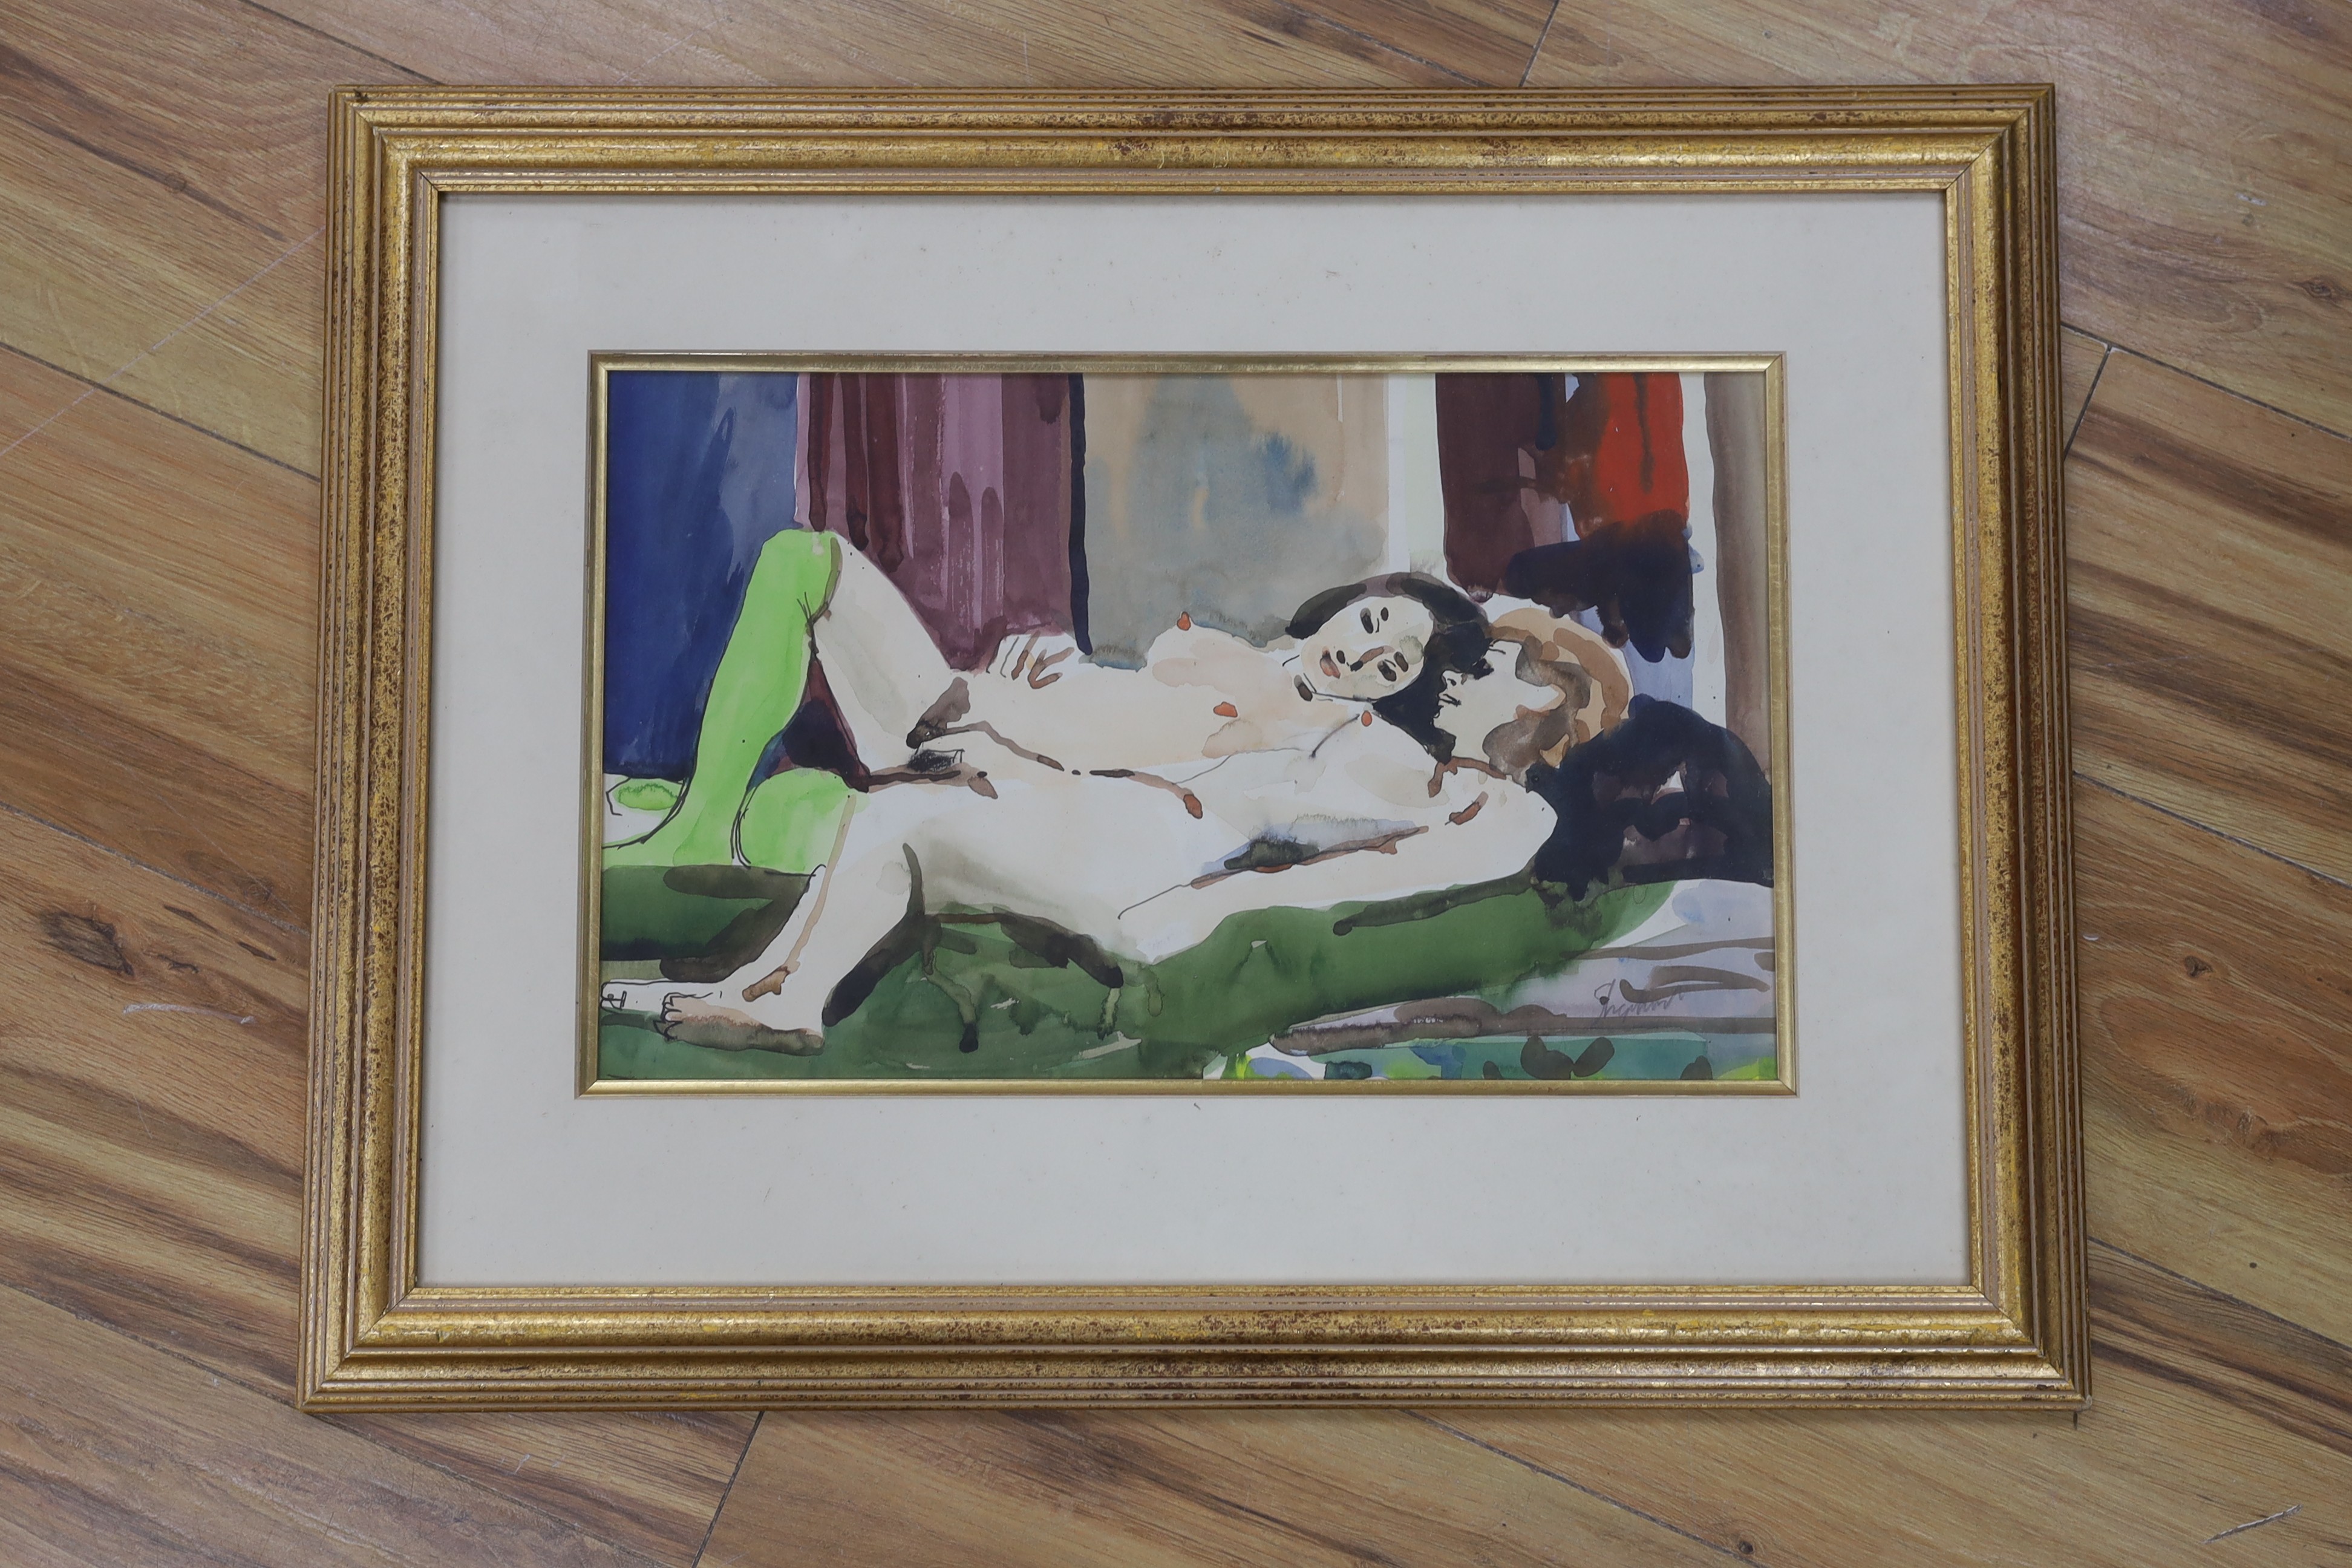 Sydney Horne Shepherd (1909-1993), watercolour, Reclining female nudes, signed in pencil, 27 x 44cm